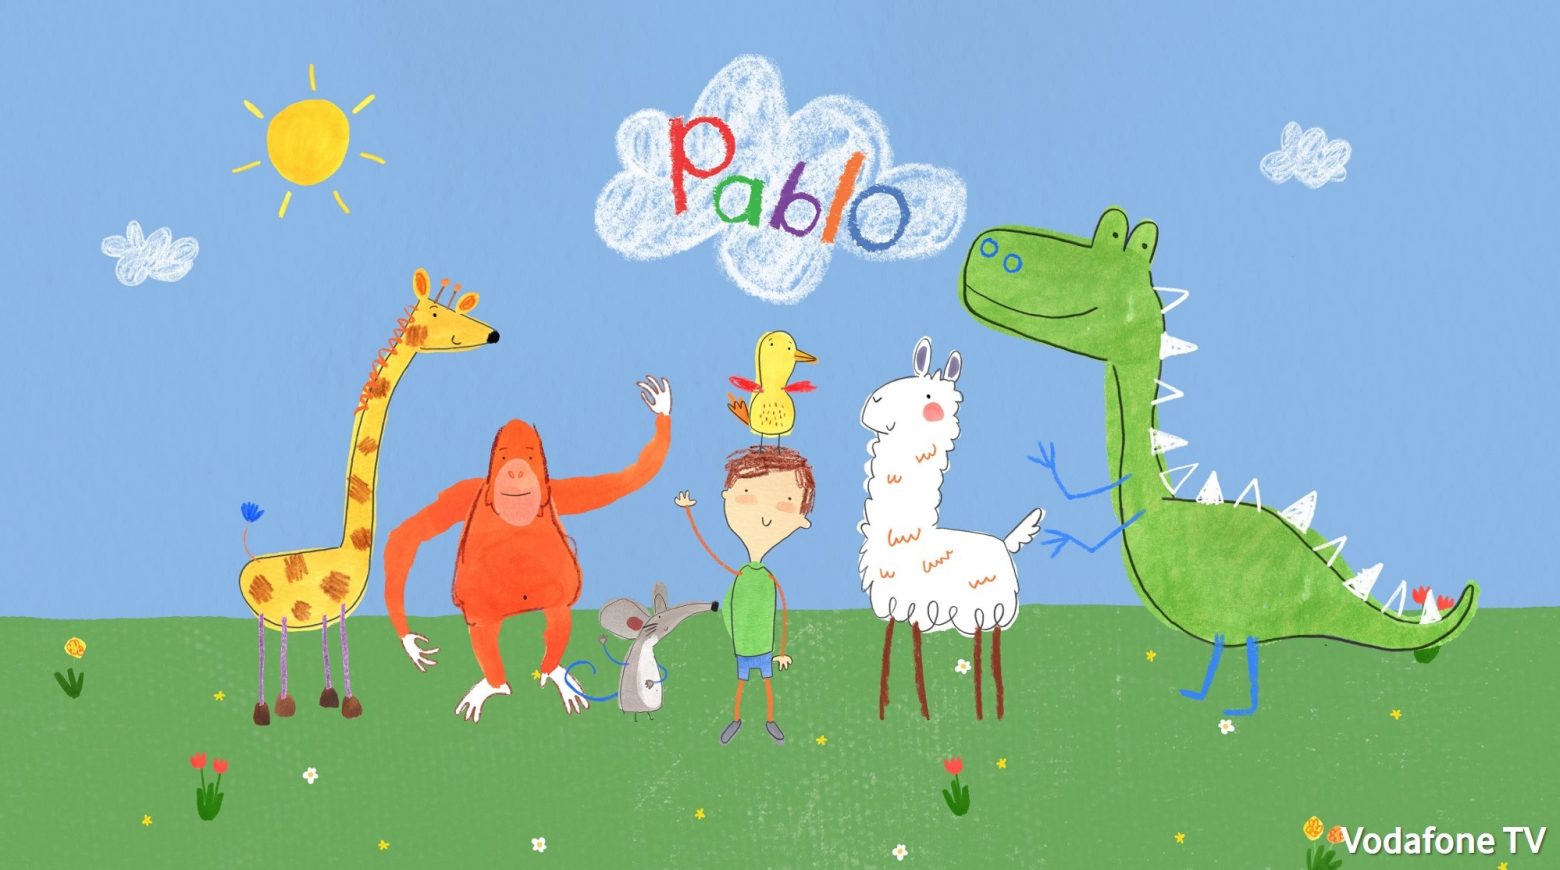 Pablo: Η παιδική σειρά που μας βοήθησε να κατανοήσουμε τον αυτισμό μέσα από τα μάτια ενός παιδιού επιστρέφει στο Vodafone TV